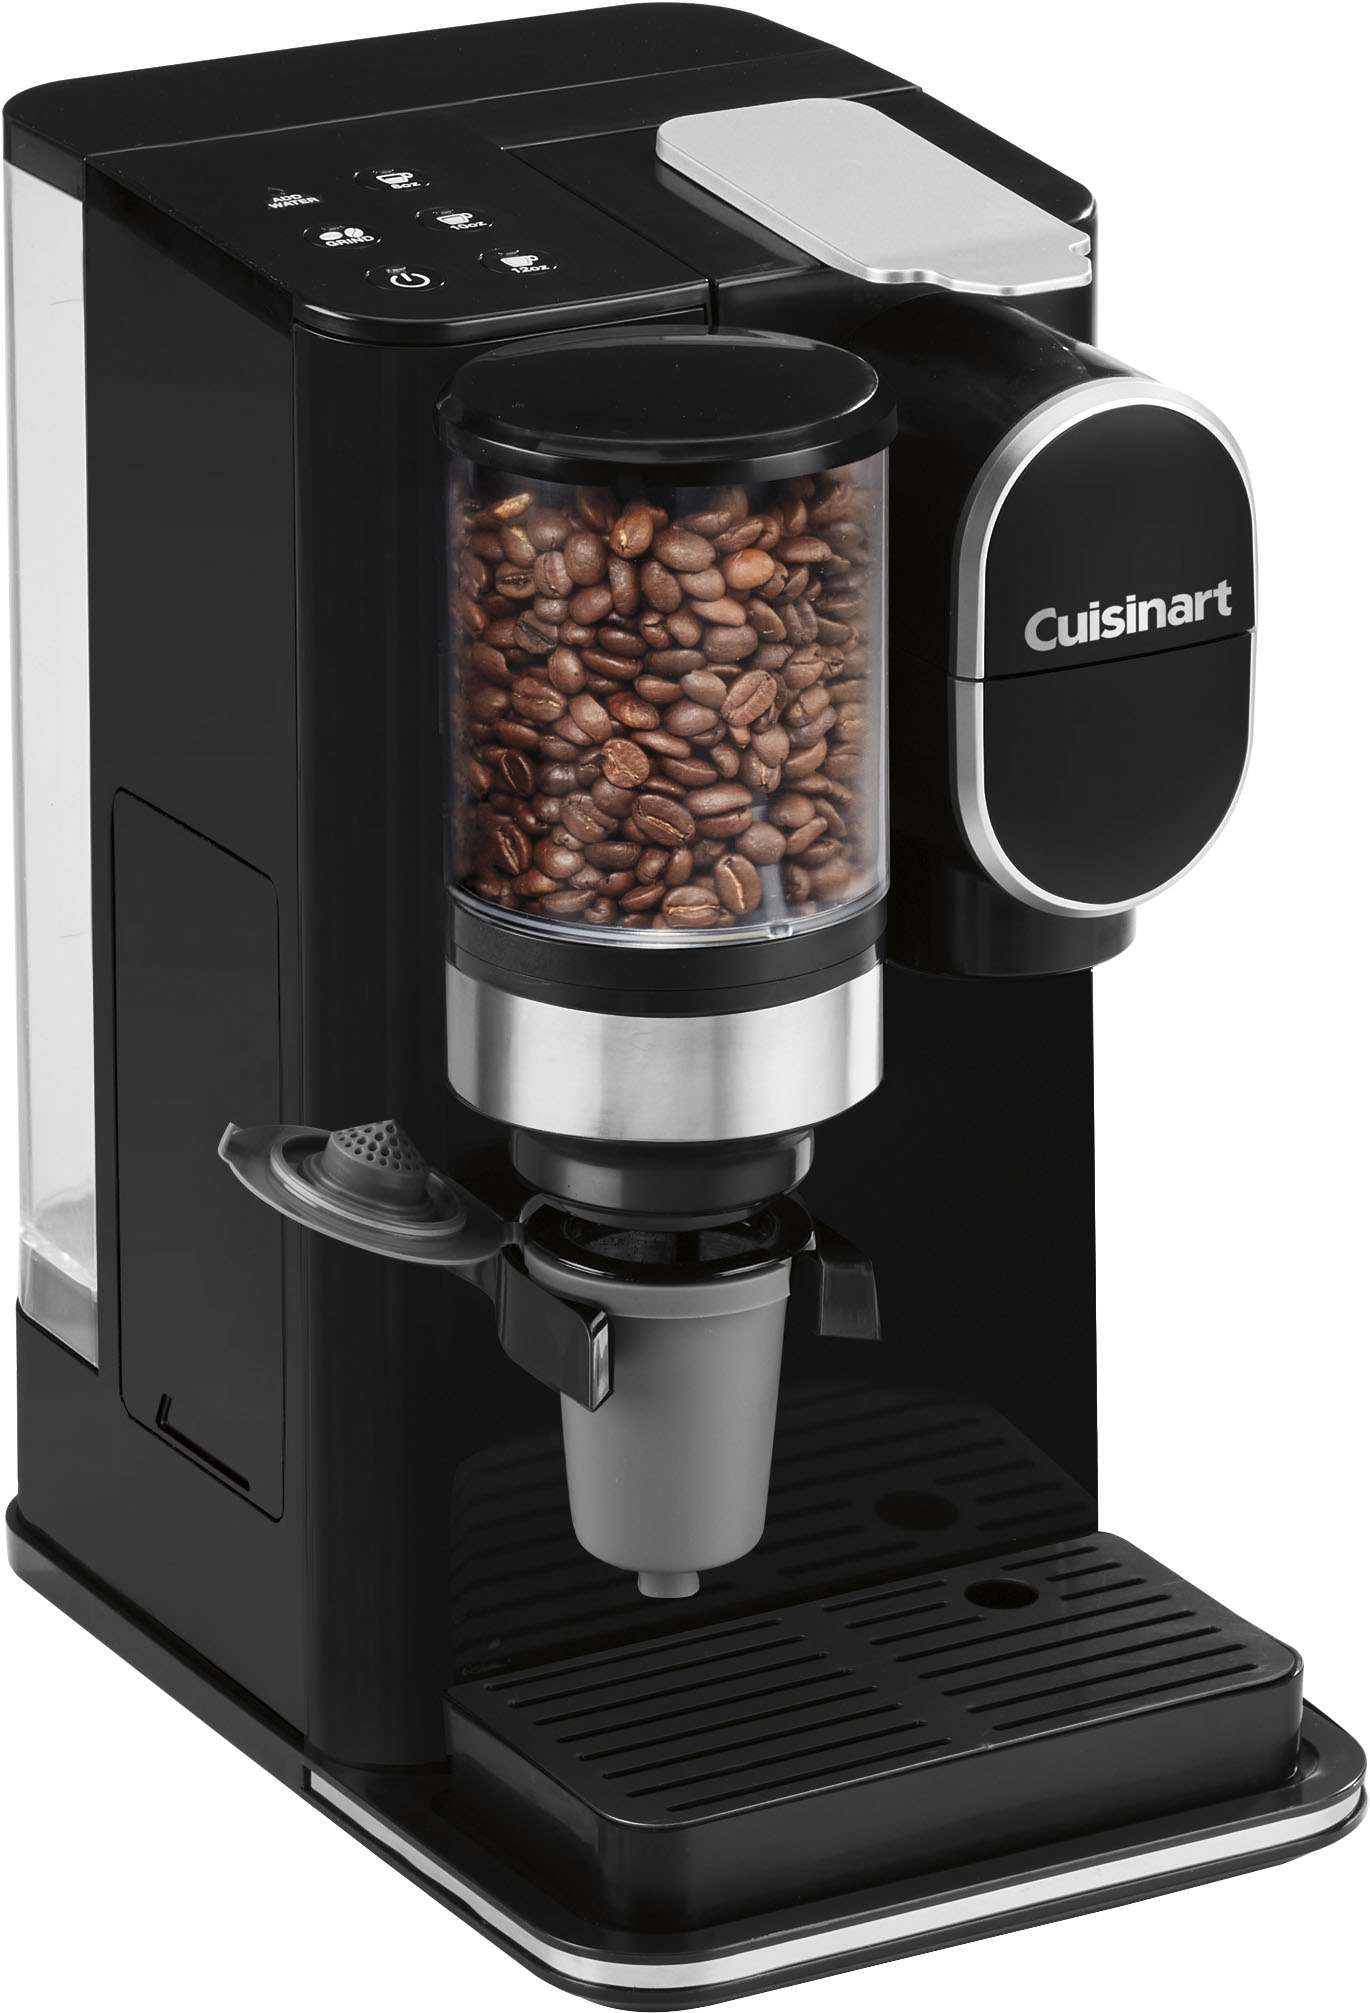 Cuisinart Grind & Brew Single-Serve Coffee Maker